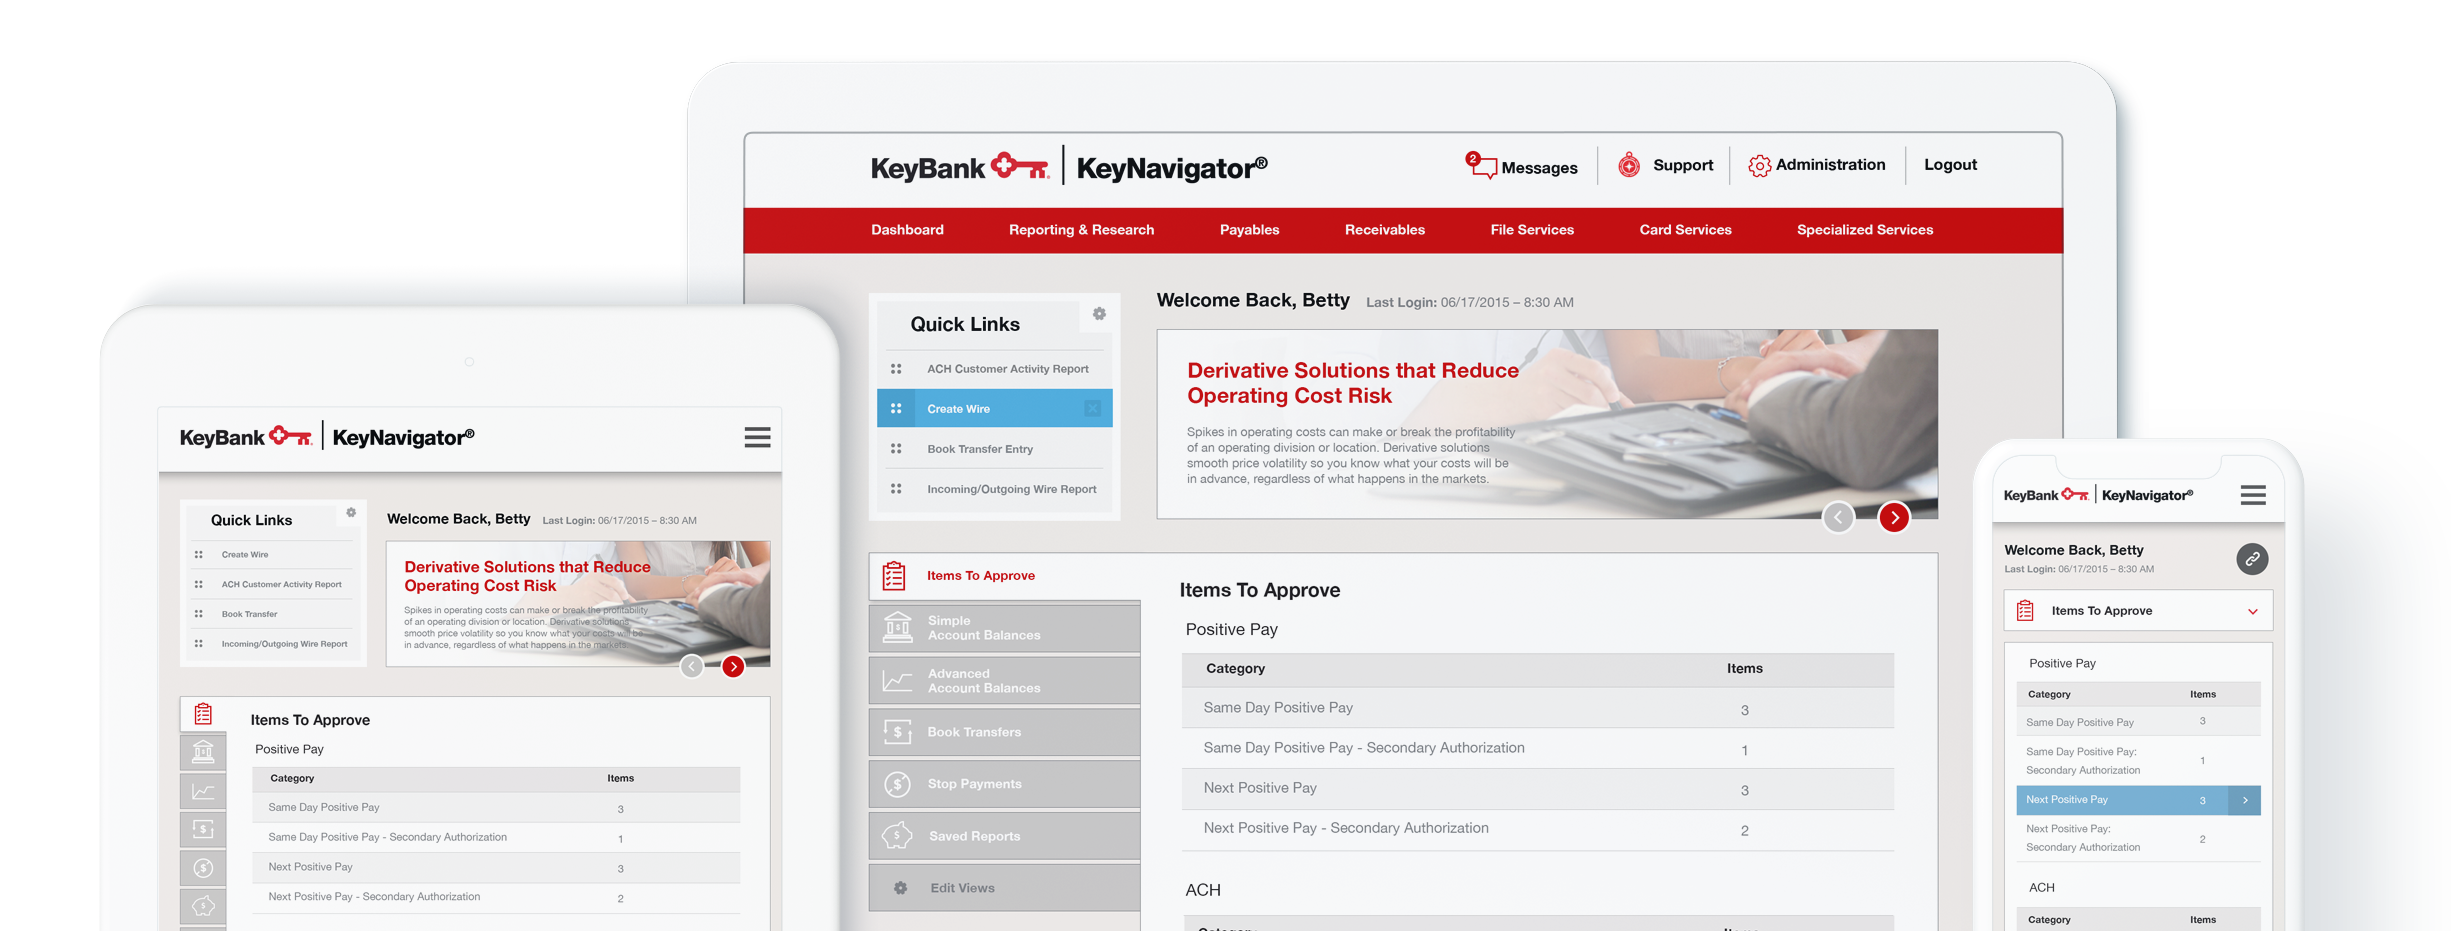 KeyBank Online User Experience Redesign - KeyNavigator